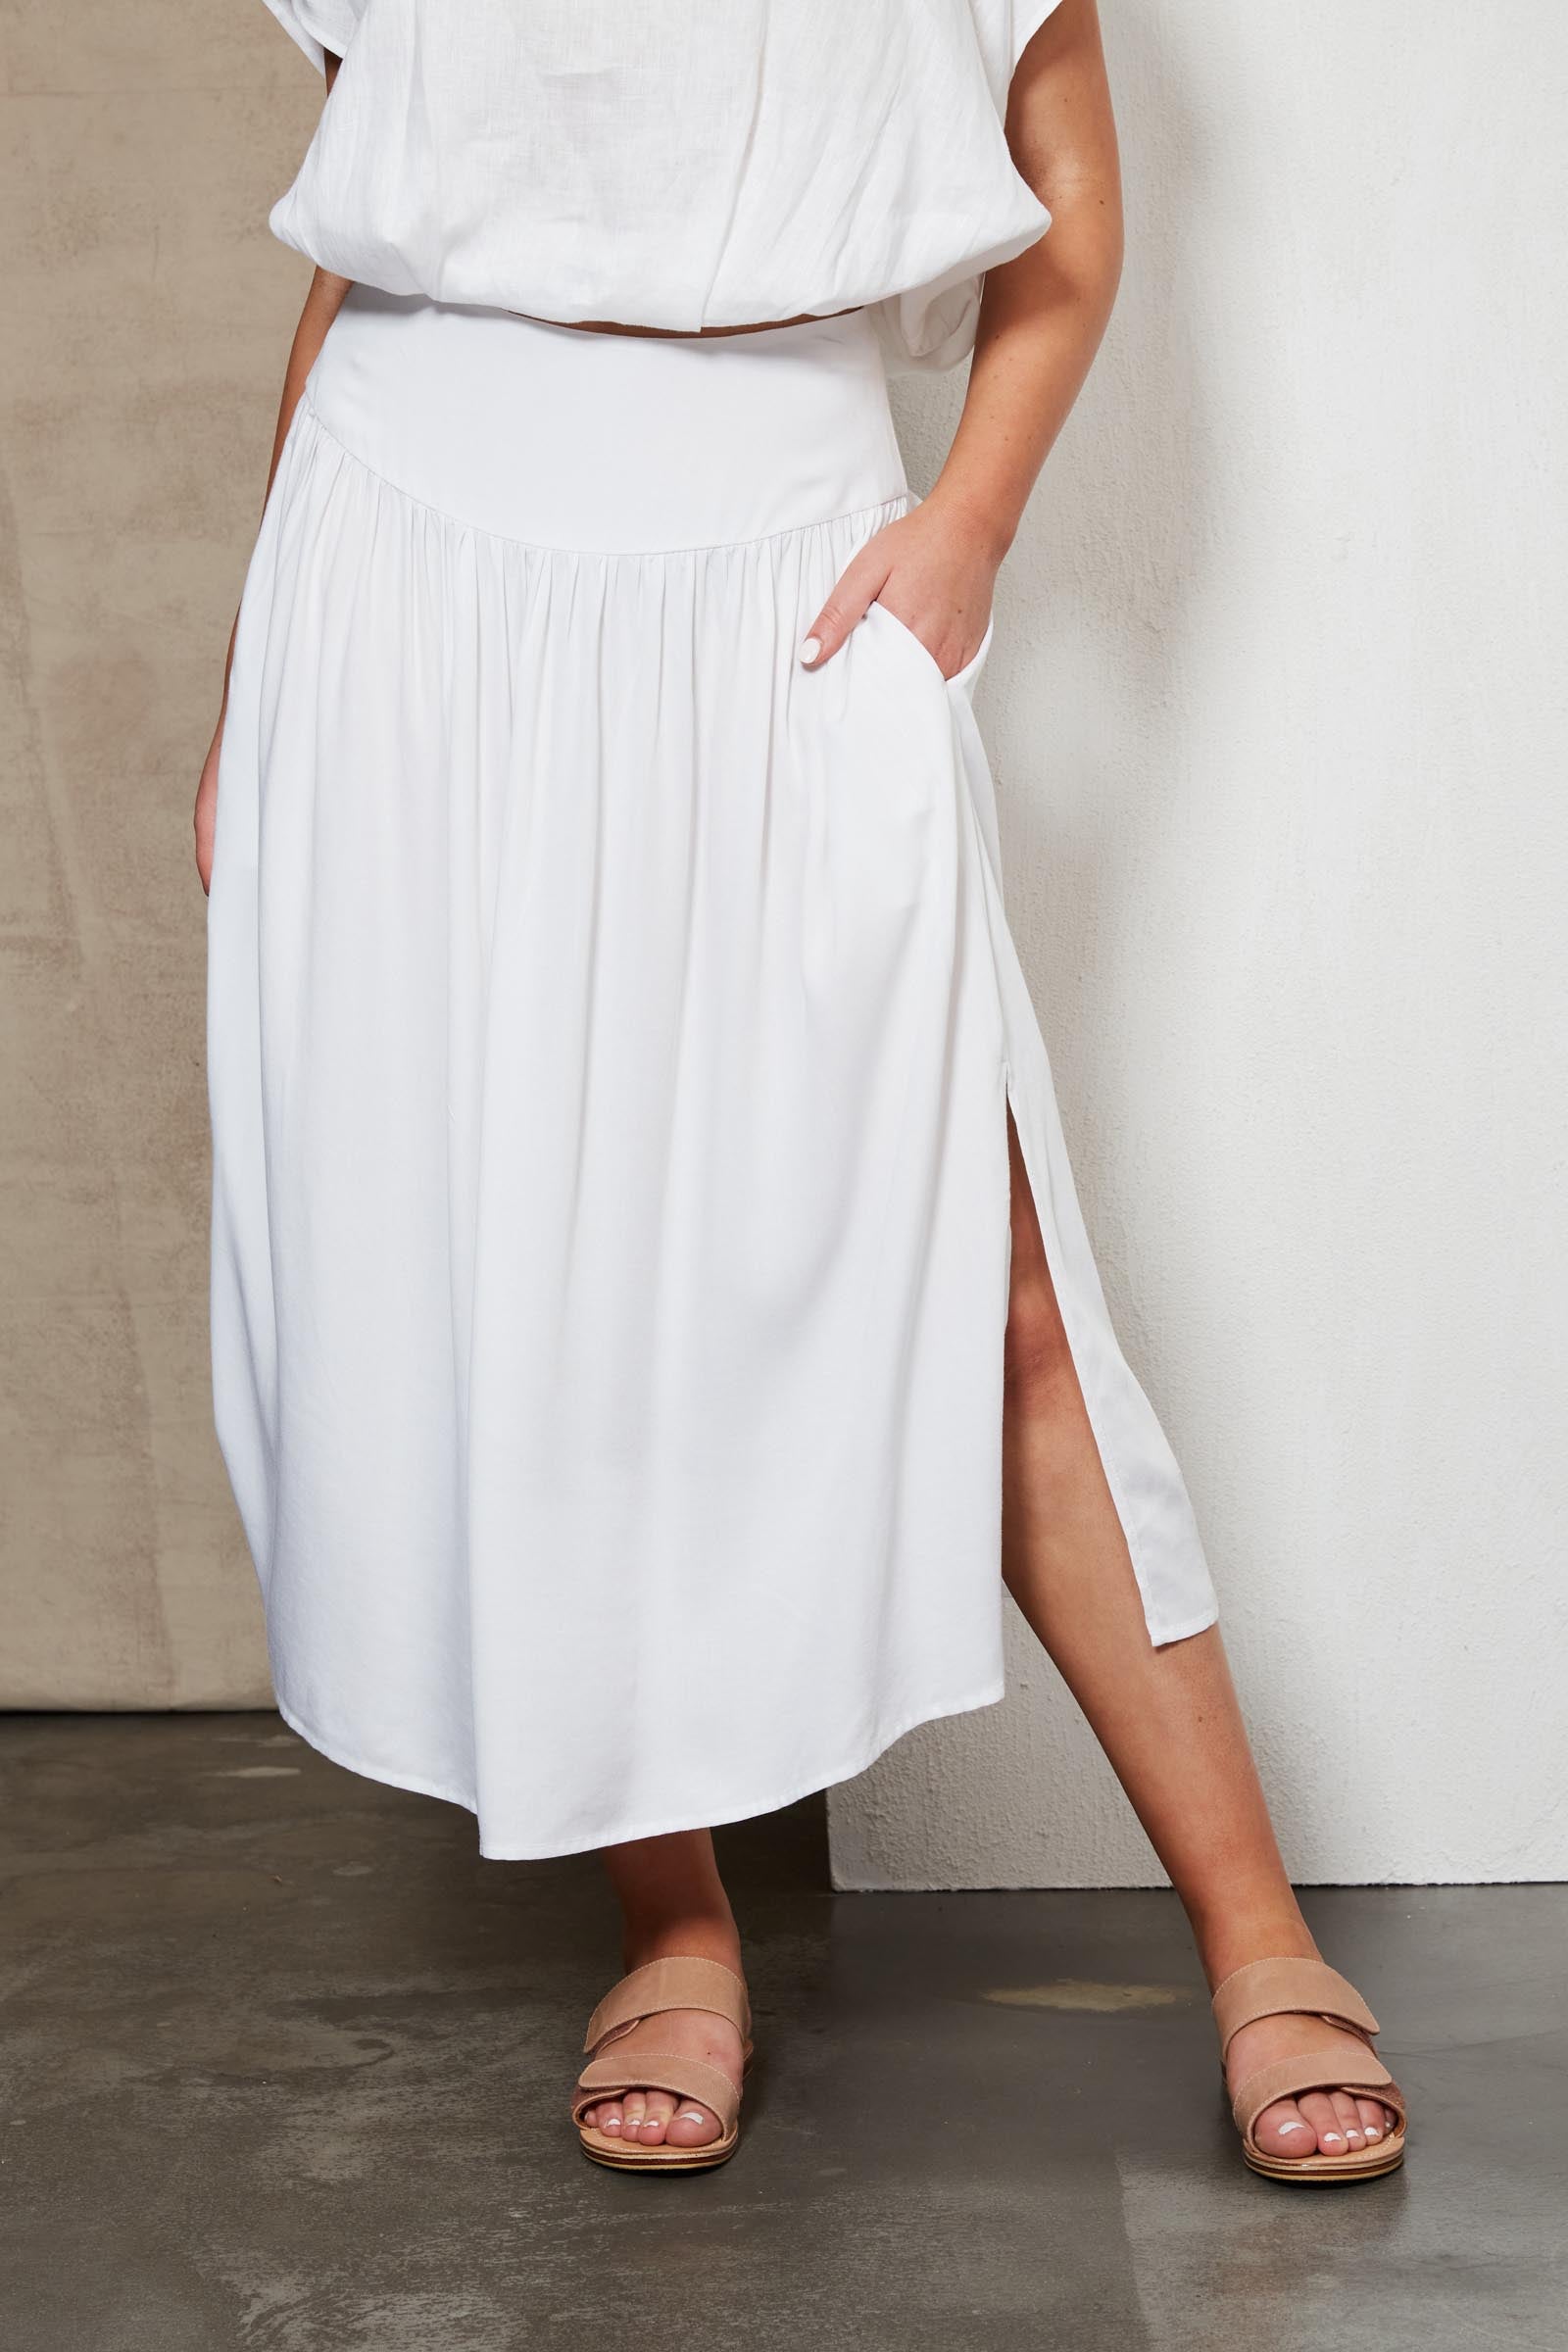 Amity Skirt - Salt - eb&ive Clothing - Skirt Mid